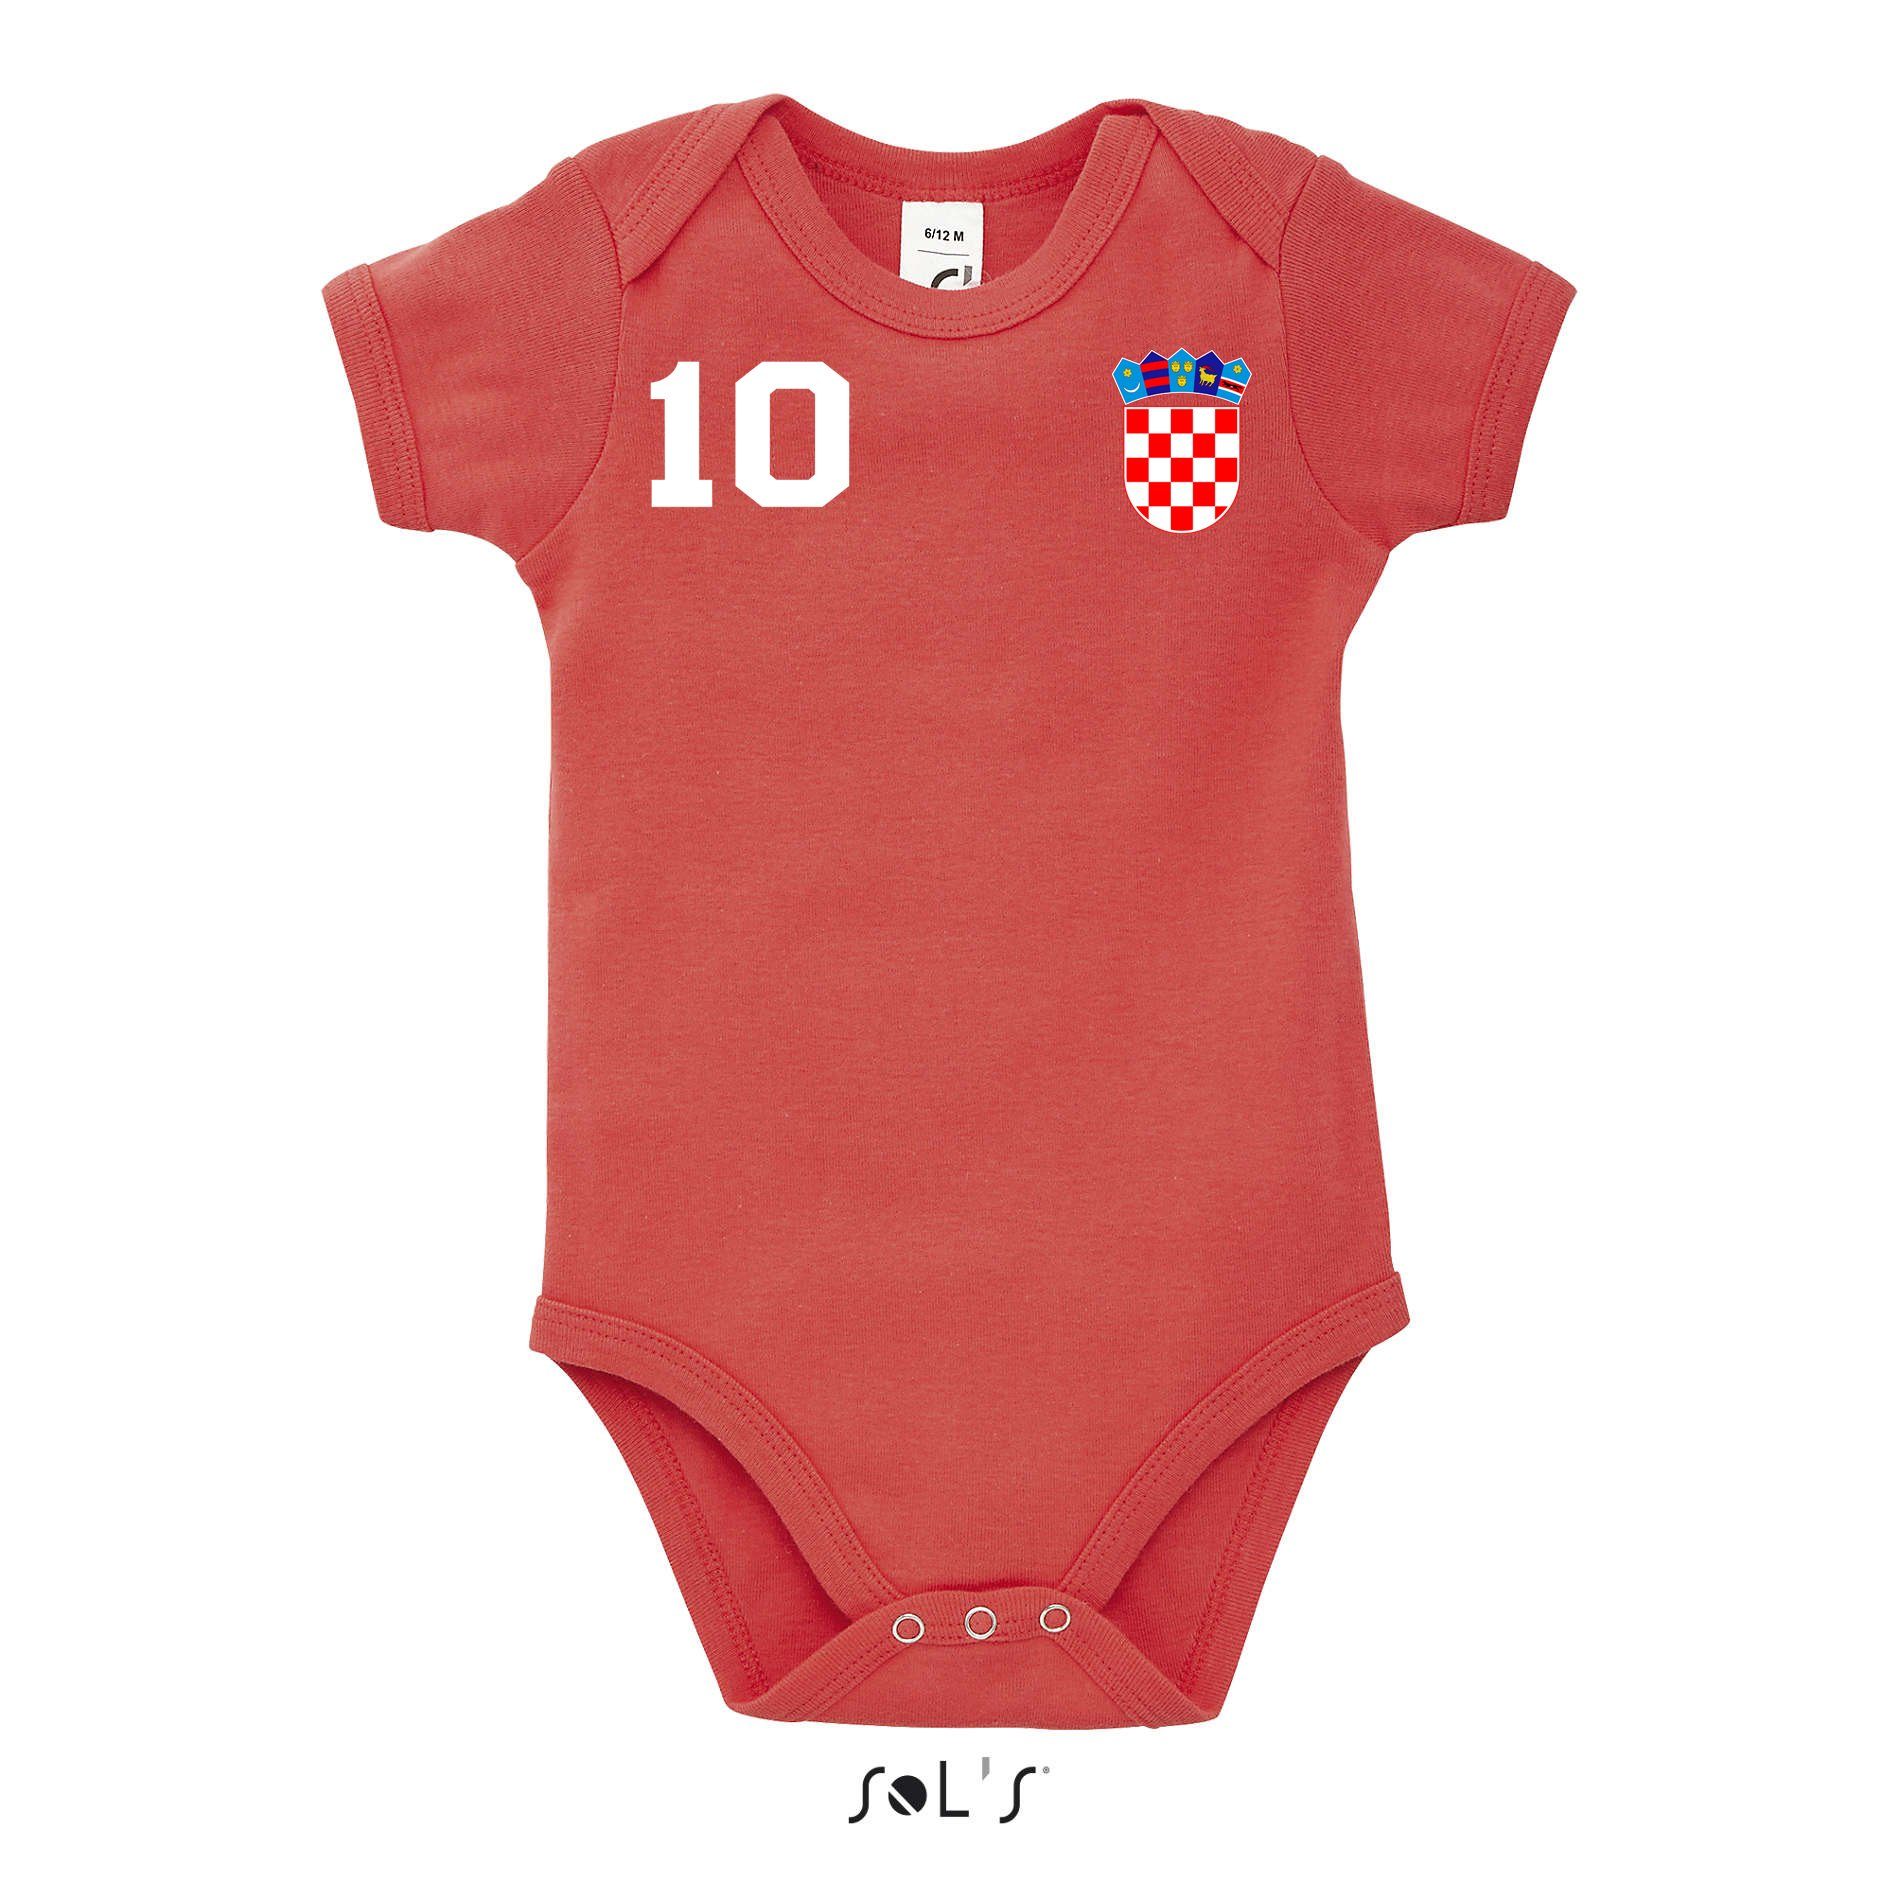 Blondie & Brownie Strampler Kinder Baby Kroatien Hrvatska Sport Trikot Fußball Weltmeister WM EM Weiss/Rot